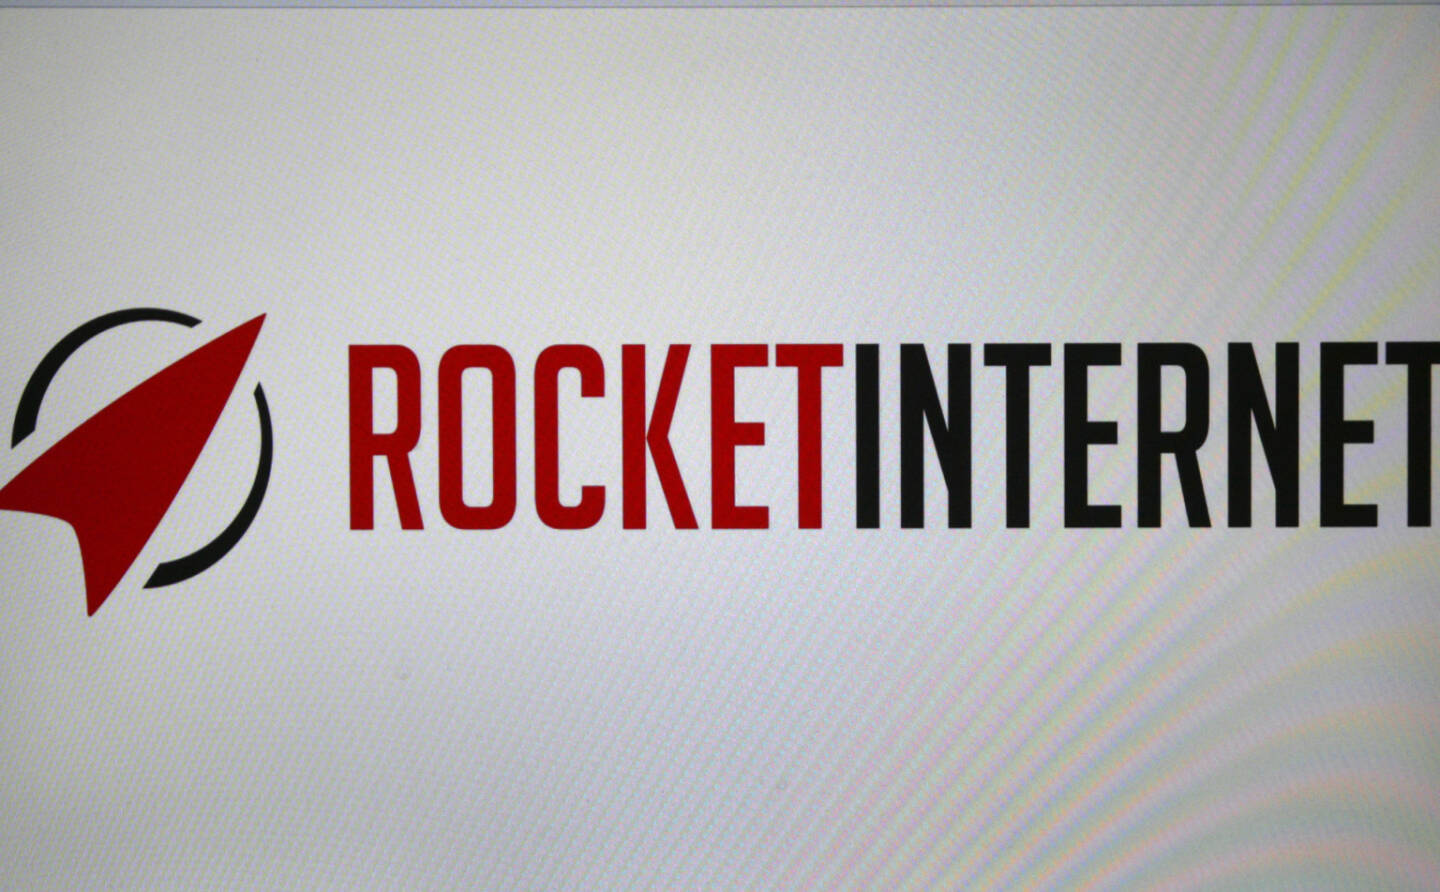 Rocket Internet, Logo <a href=http://www.shutterstock.com/gallery-320989p1.html?cr=00&pl=edit-00>360b</a> / <a href=http://www.shutterstock.com/editorial?cr=00&pl=edit-00>Shutterstock.com</a>